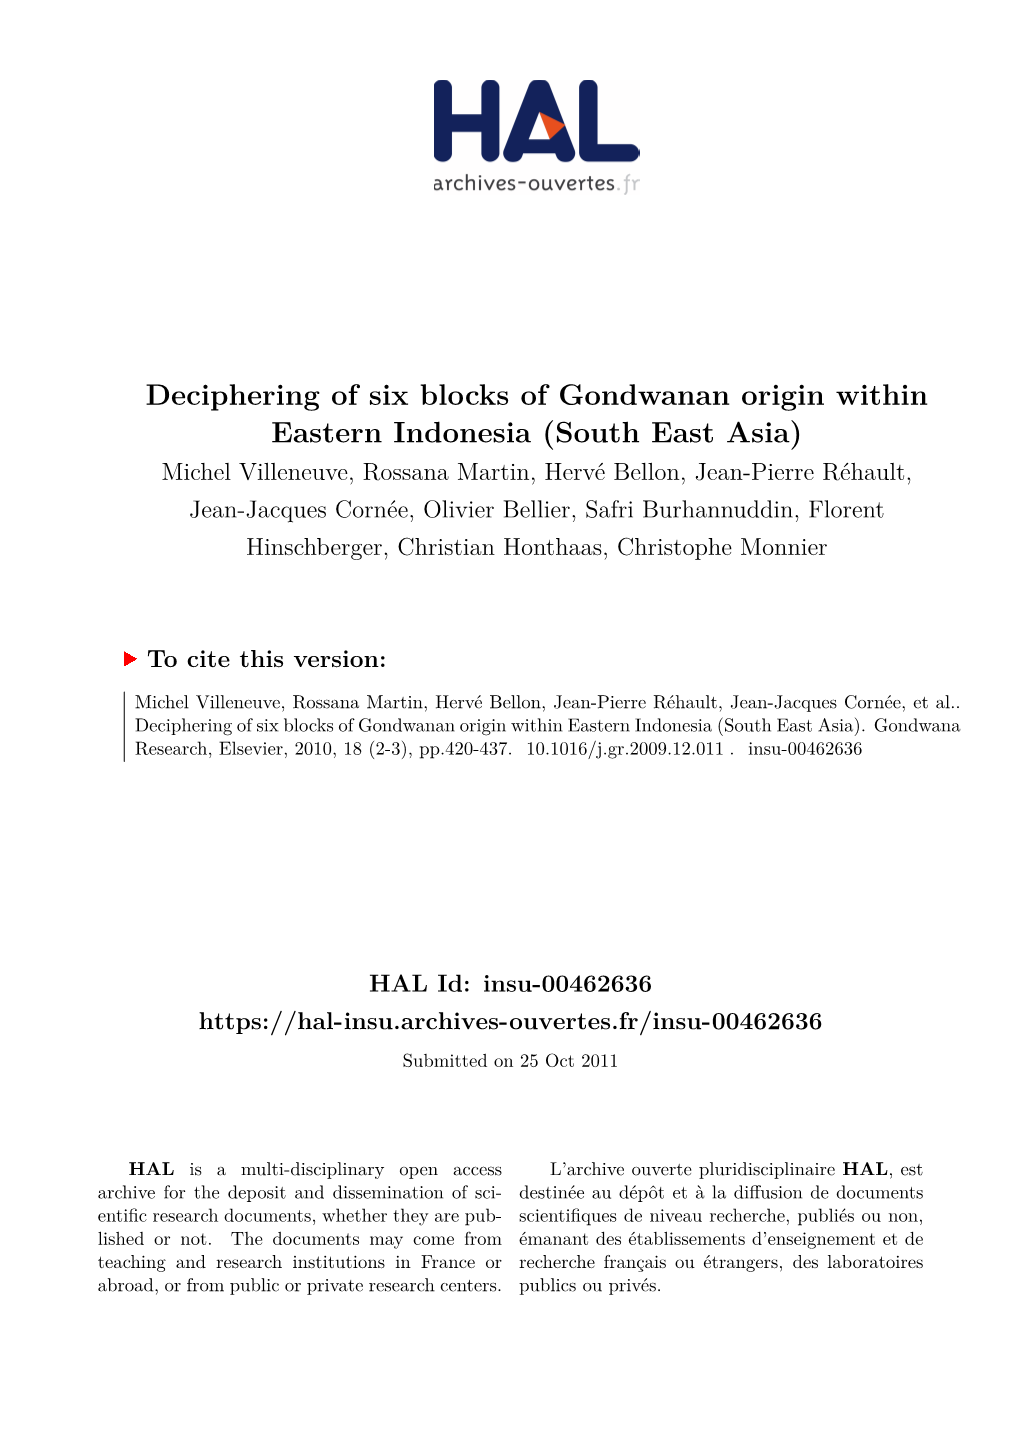 Deciphering of Six Blocks of Gondwanan Origin Within Eastern